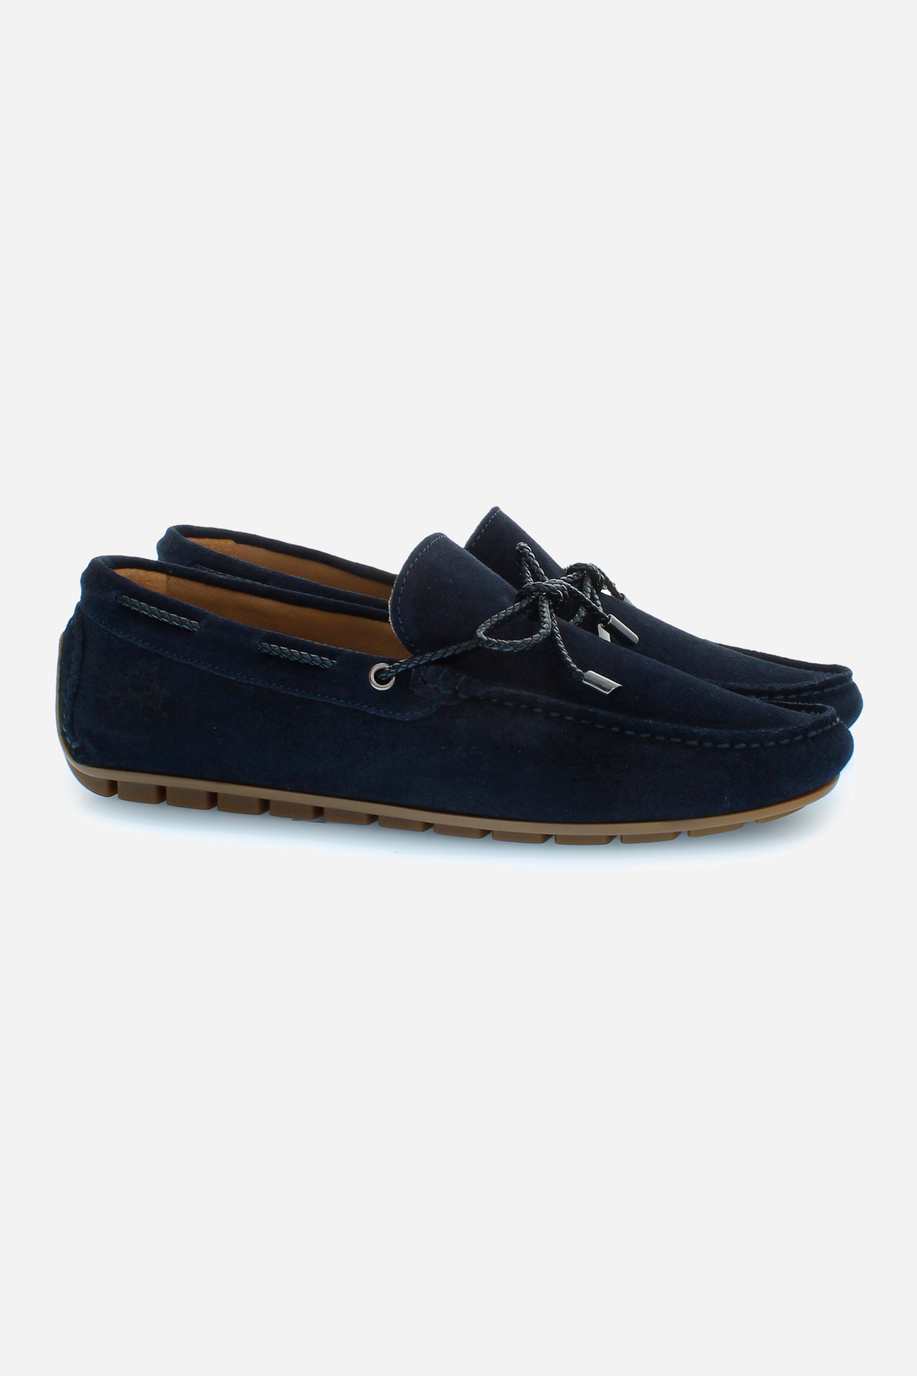 Men's suede loafers with laces - Formal Shoes | La Martina - Official Online Shop